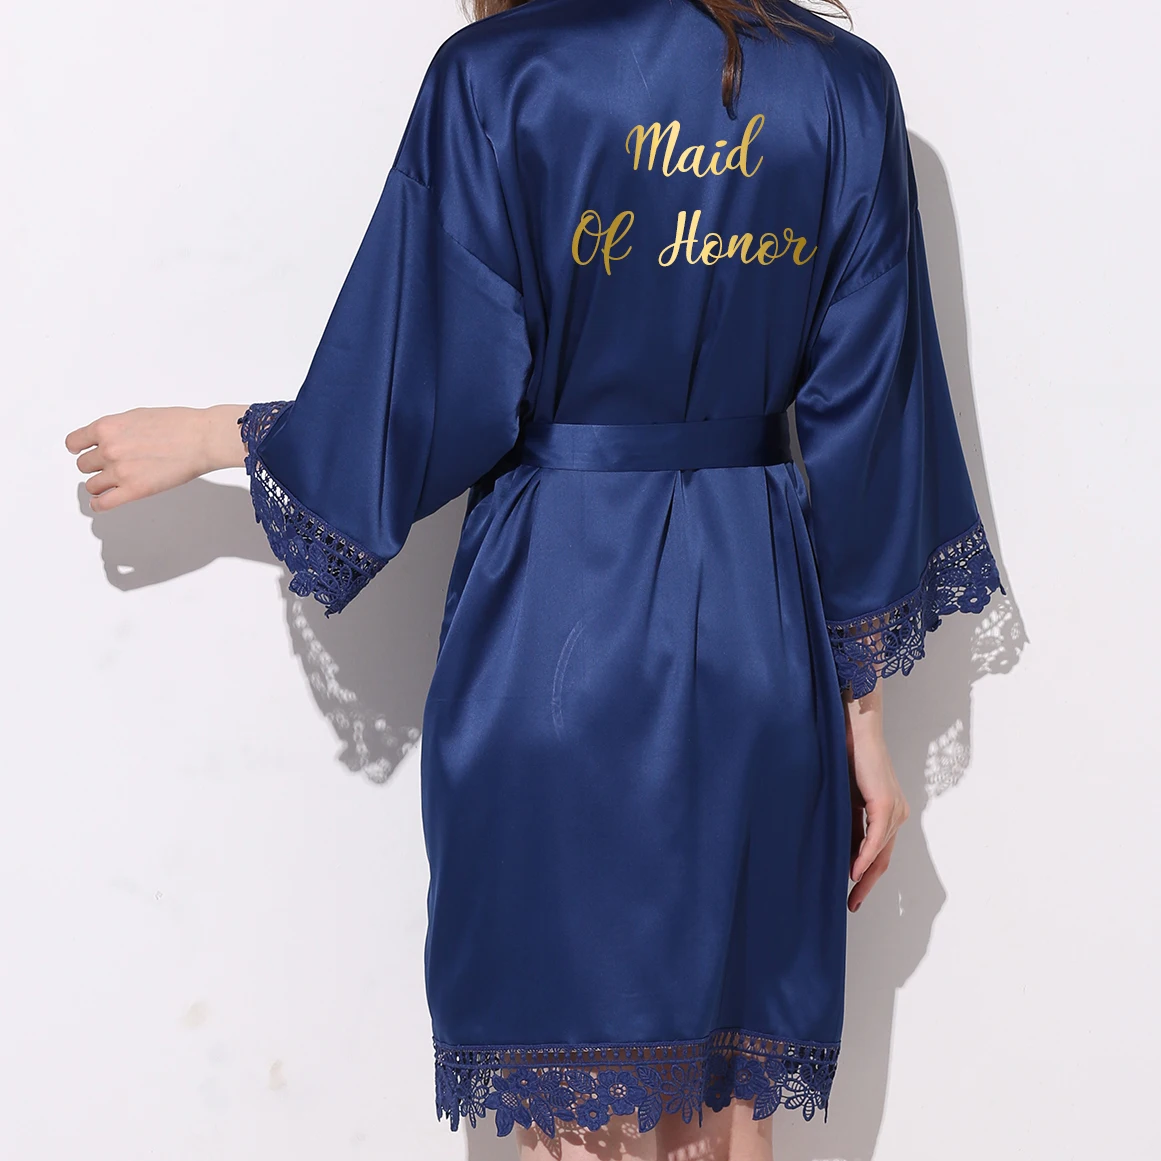 

Owiter Matt Satin Robes Plus Size Wedding Bath Robe Bridesmaid Bride Dressing Gown Women Navy Blue Gold Sleepwear Maid of Honor